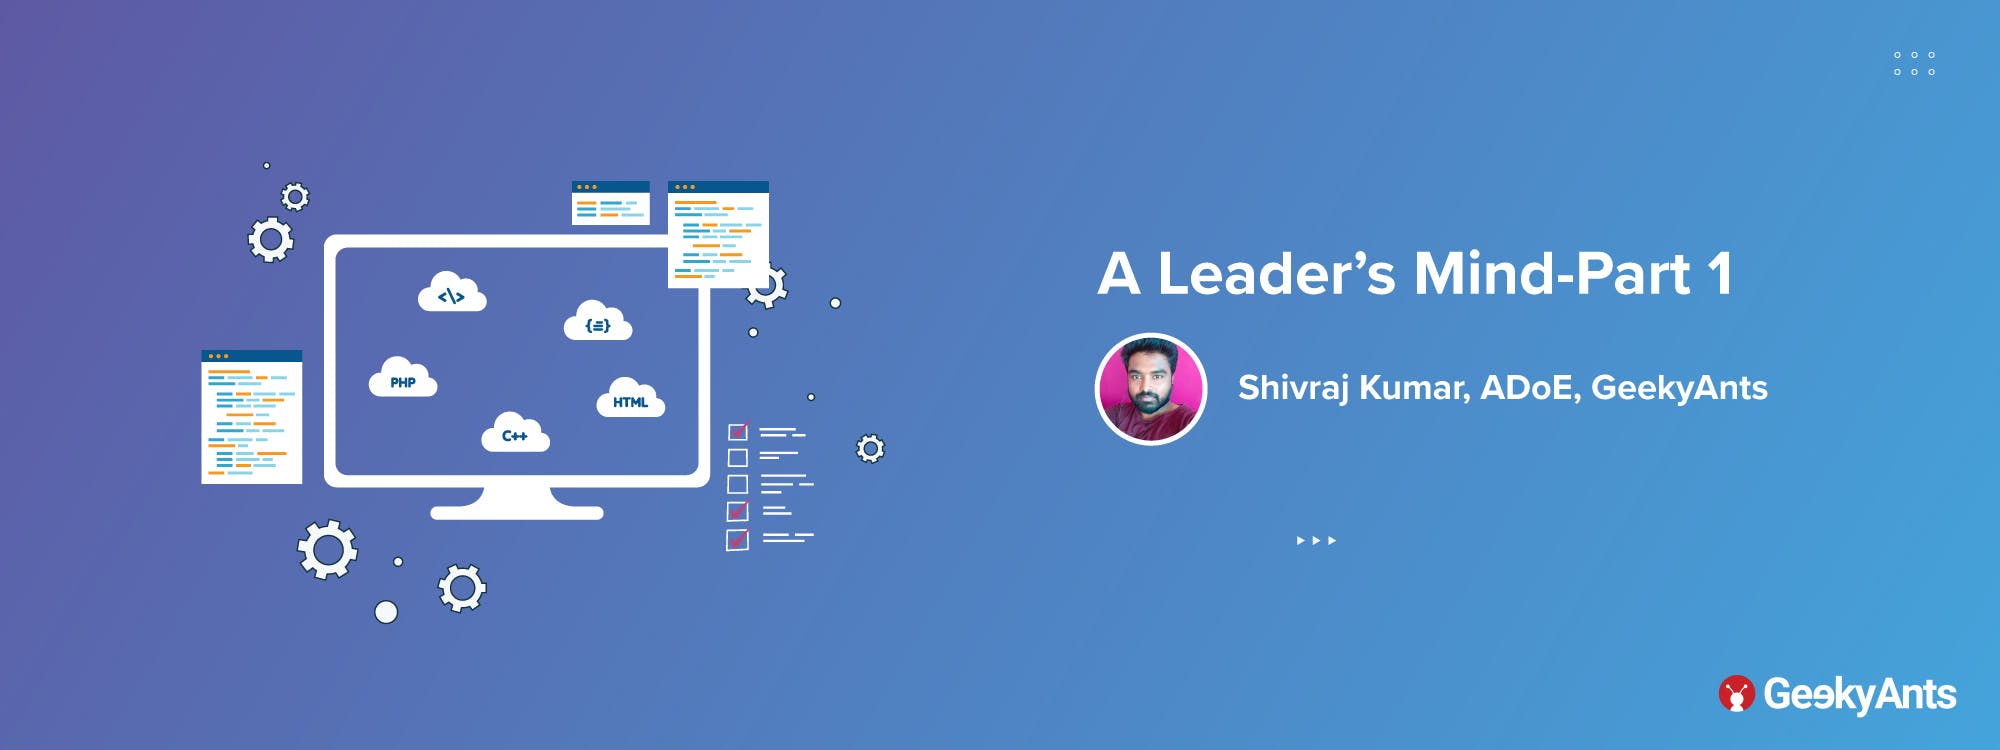 A Leader’s Mind Part 1: Shivraj Kumar, ADoE